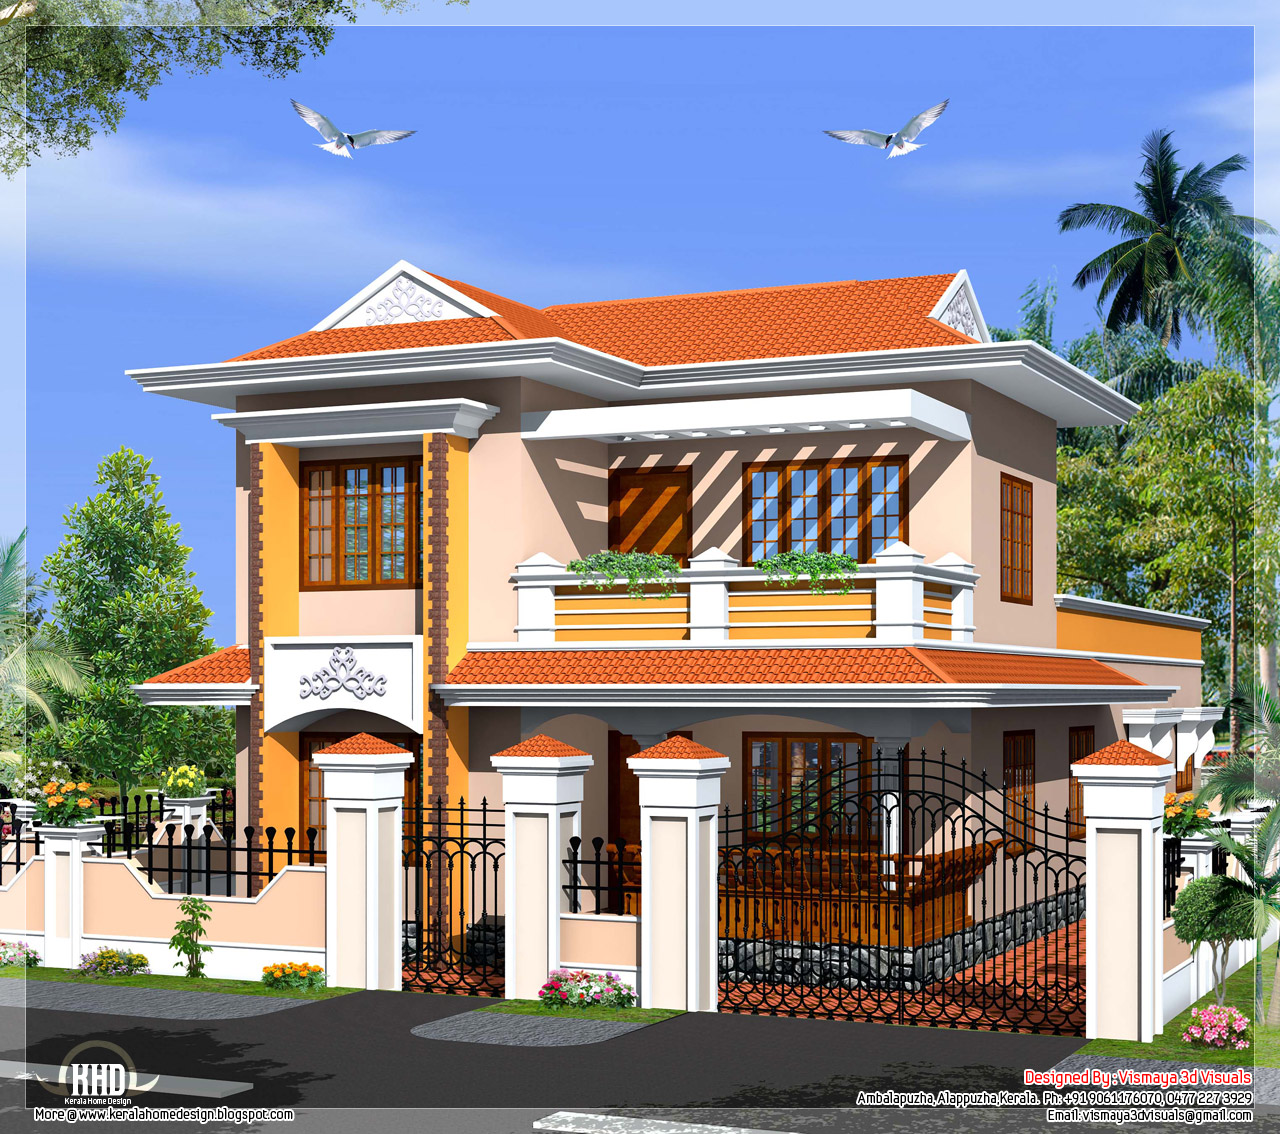  Kerala  model  villa in 2110 in square feet House  Design Plans 